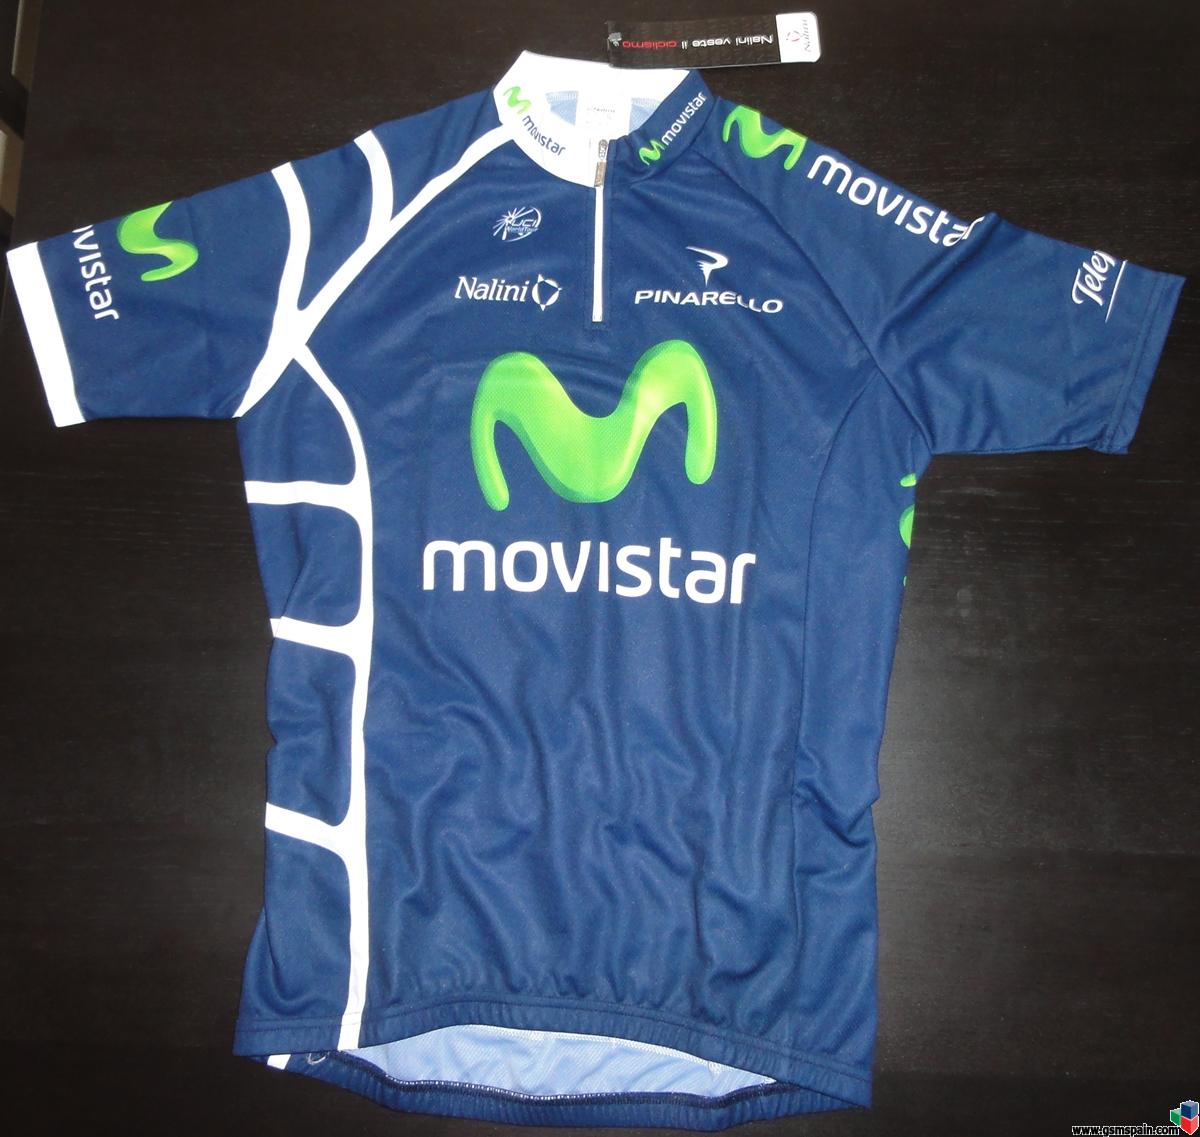 [VENDO] Maillot oficial equipo ciclista Movistar, nuevo, ORIGINAL